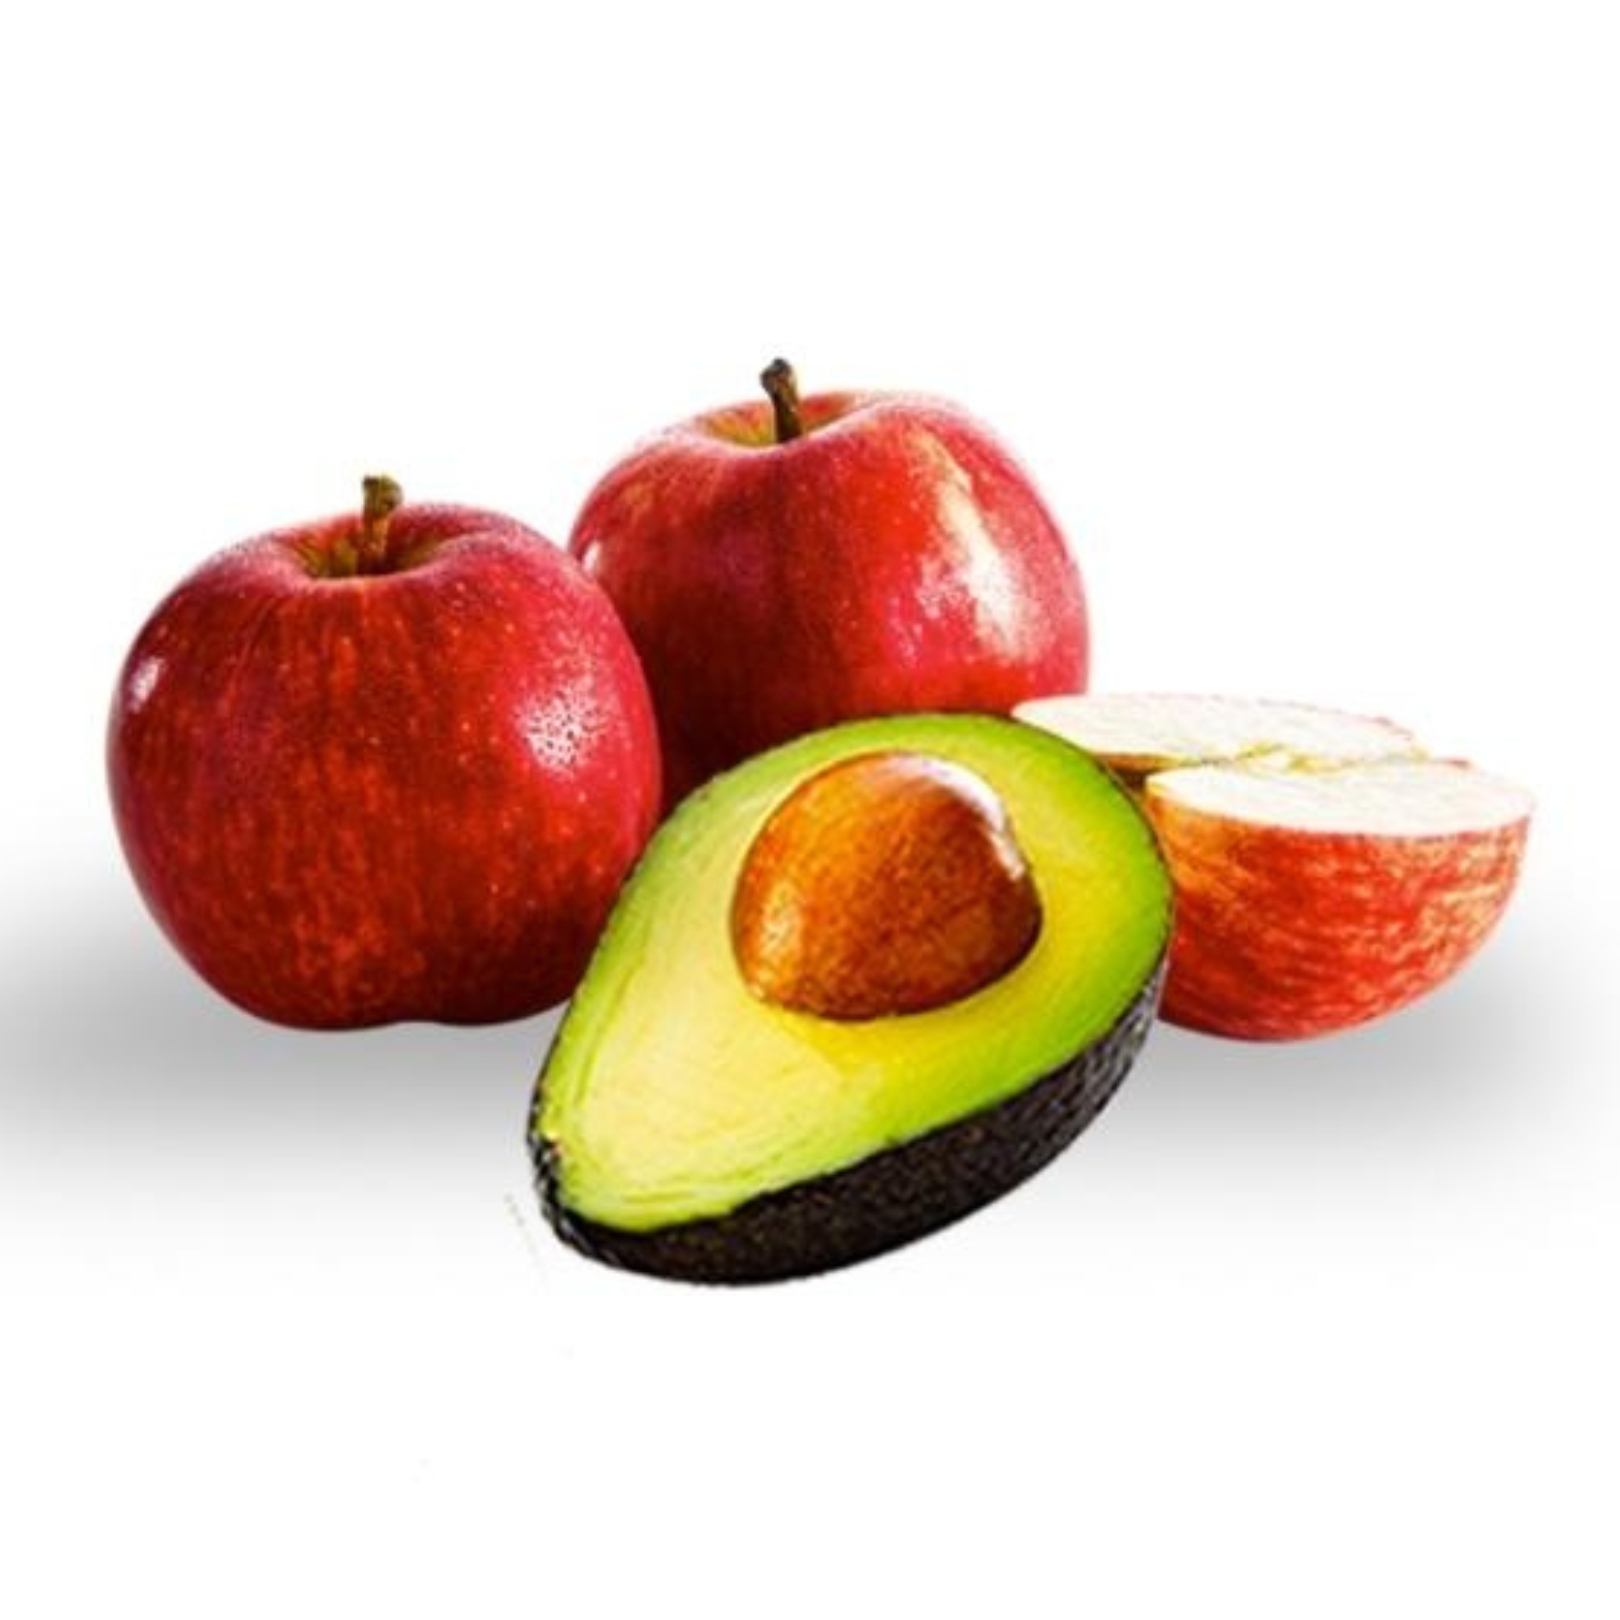 Buy Apple Avocado Online NZ - Twisted Citrus